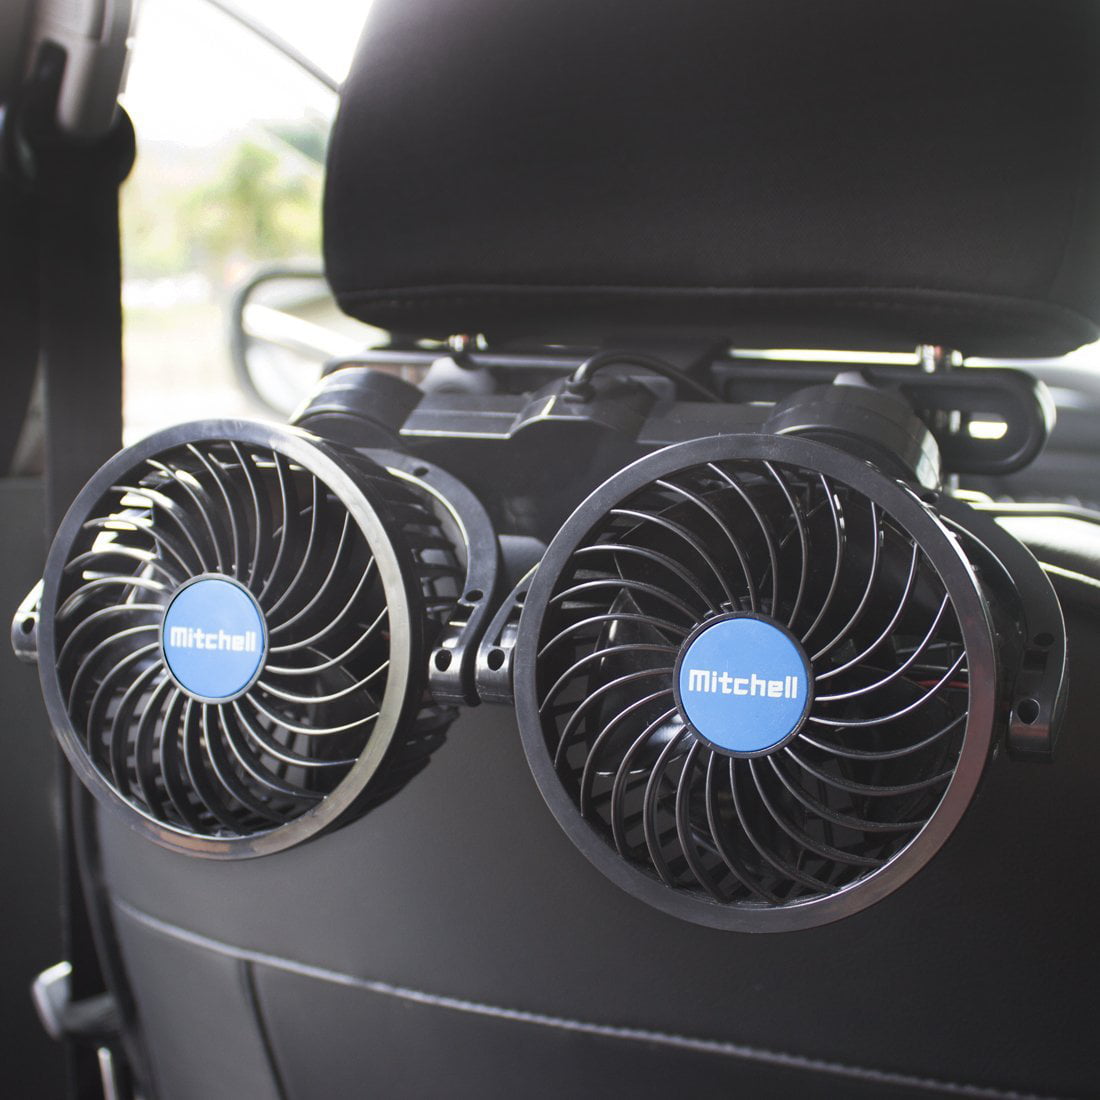 poraxy Car Fans,12V Electric Auto Cooling Fan, Headrest 360 Degree